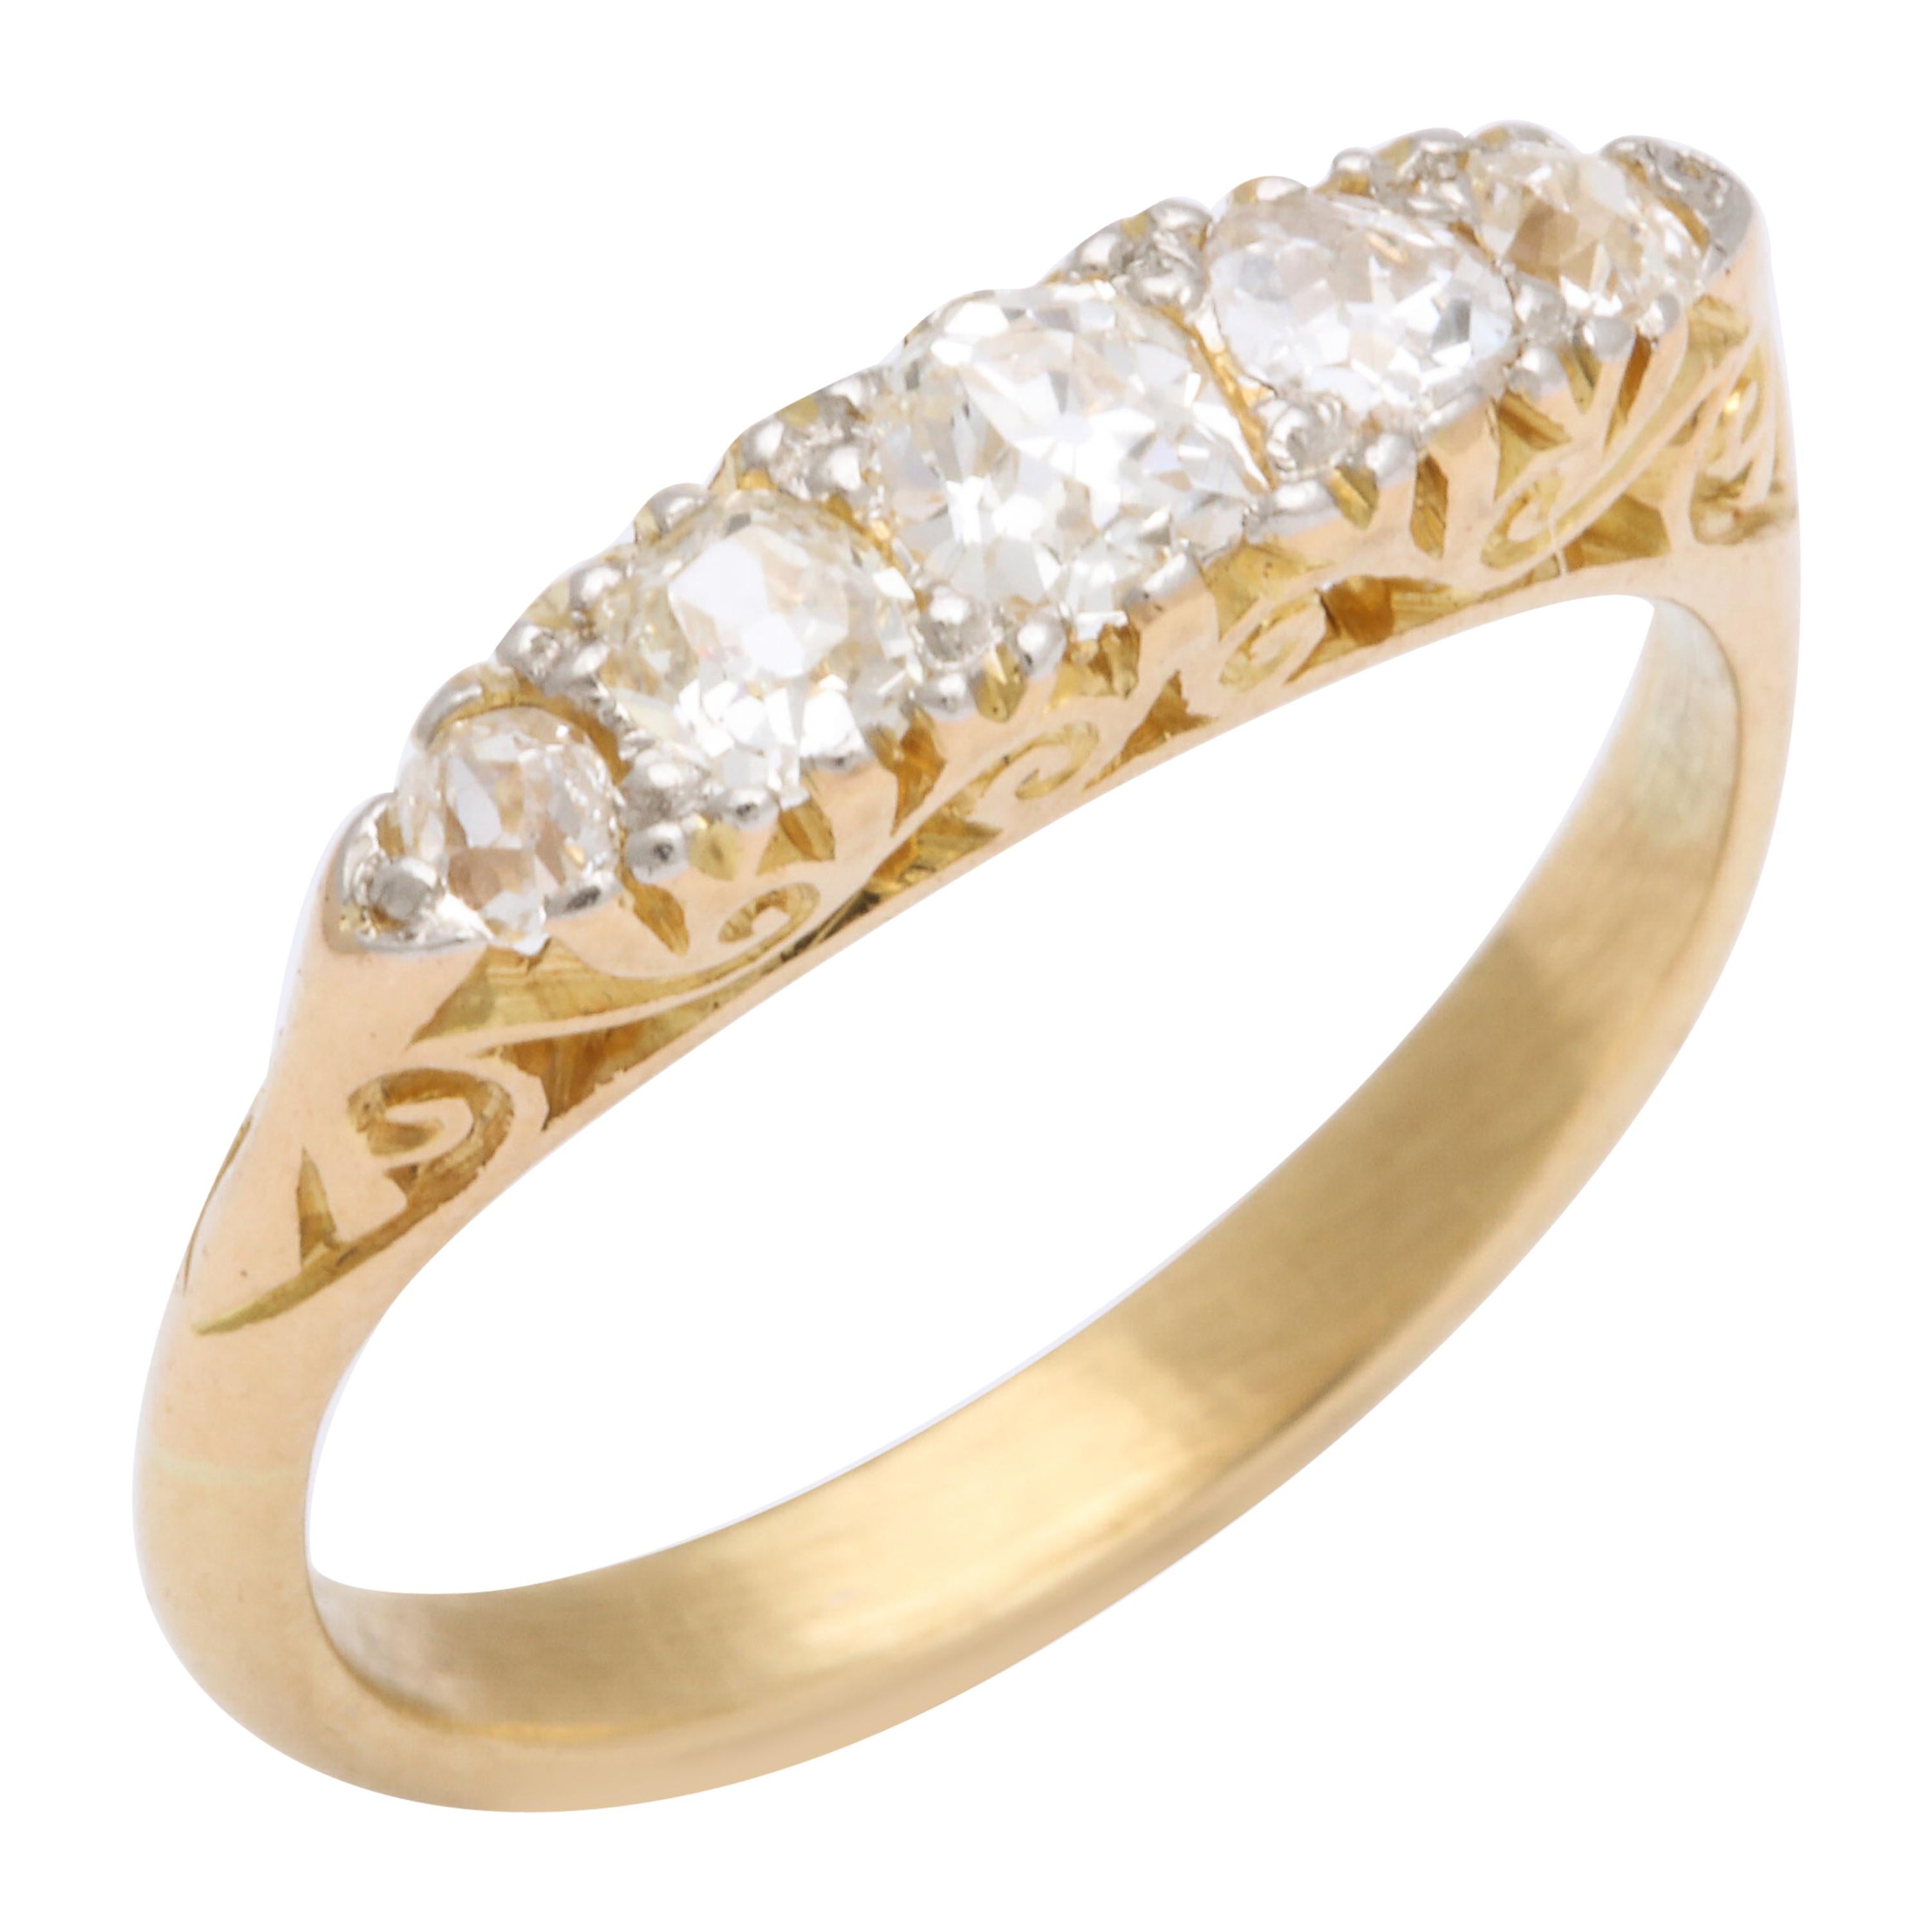 English 18k Gold Diamond Five-Stone Ring, circa 1890